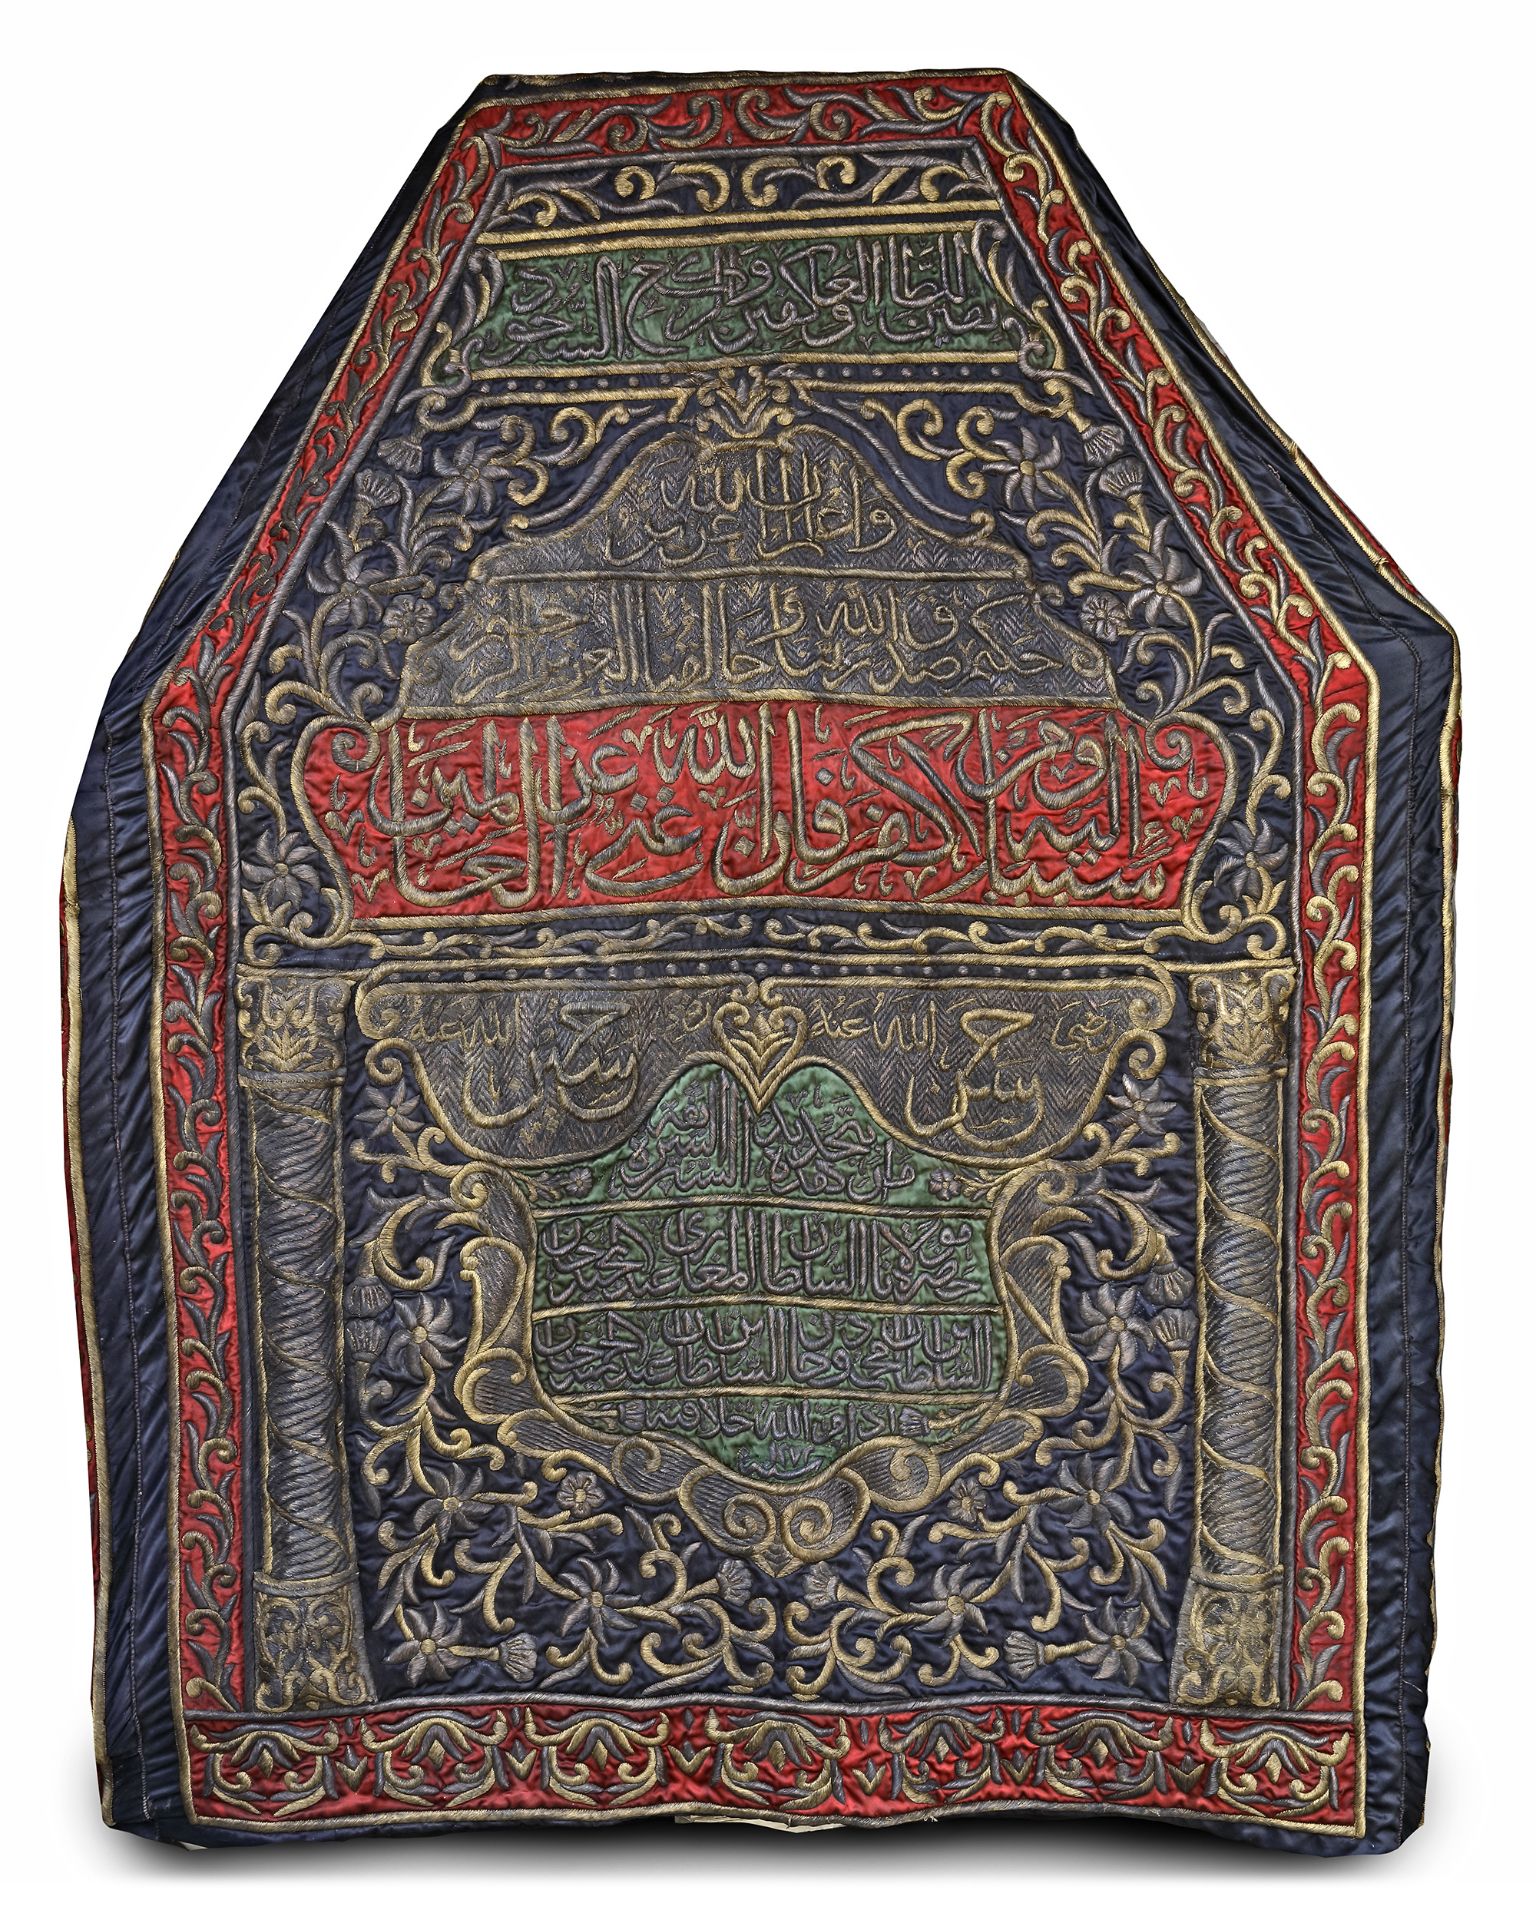 AN OTTOMAN METAL-THREAD EMBROIDERED MAQAM IBRAHIM COVER, 1272 AH/1855 AD